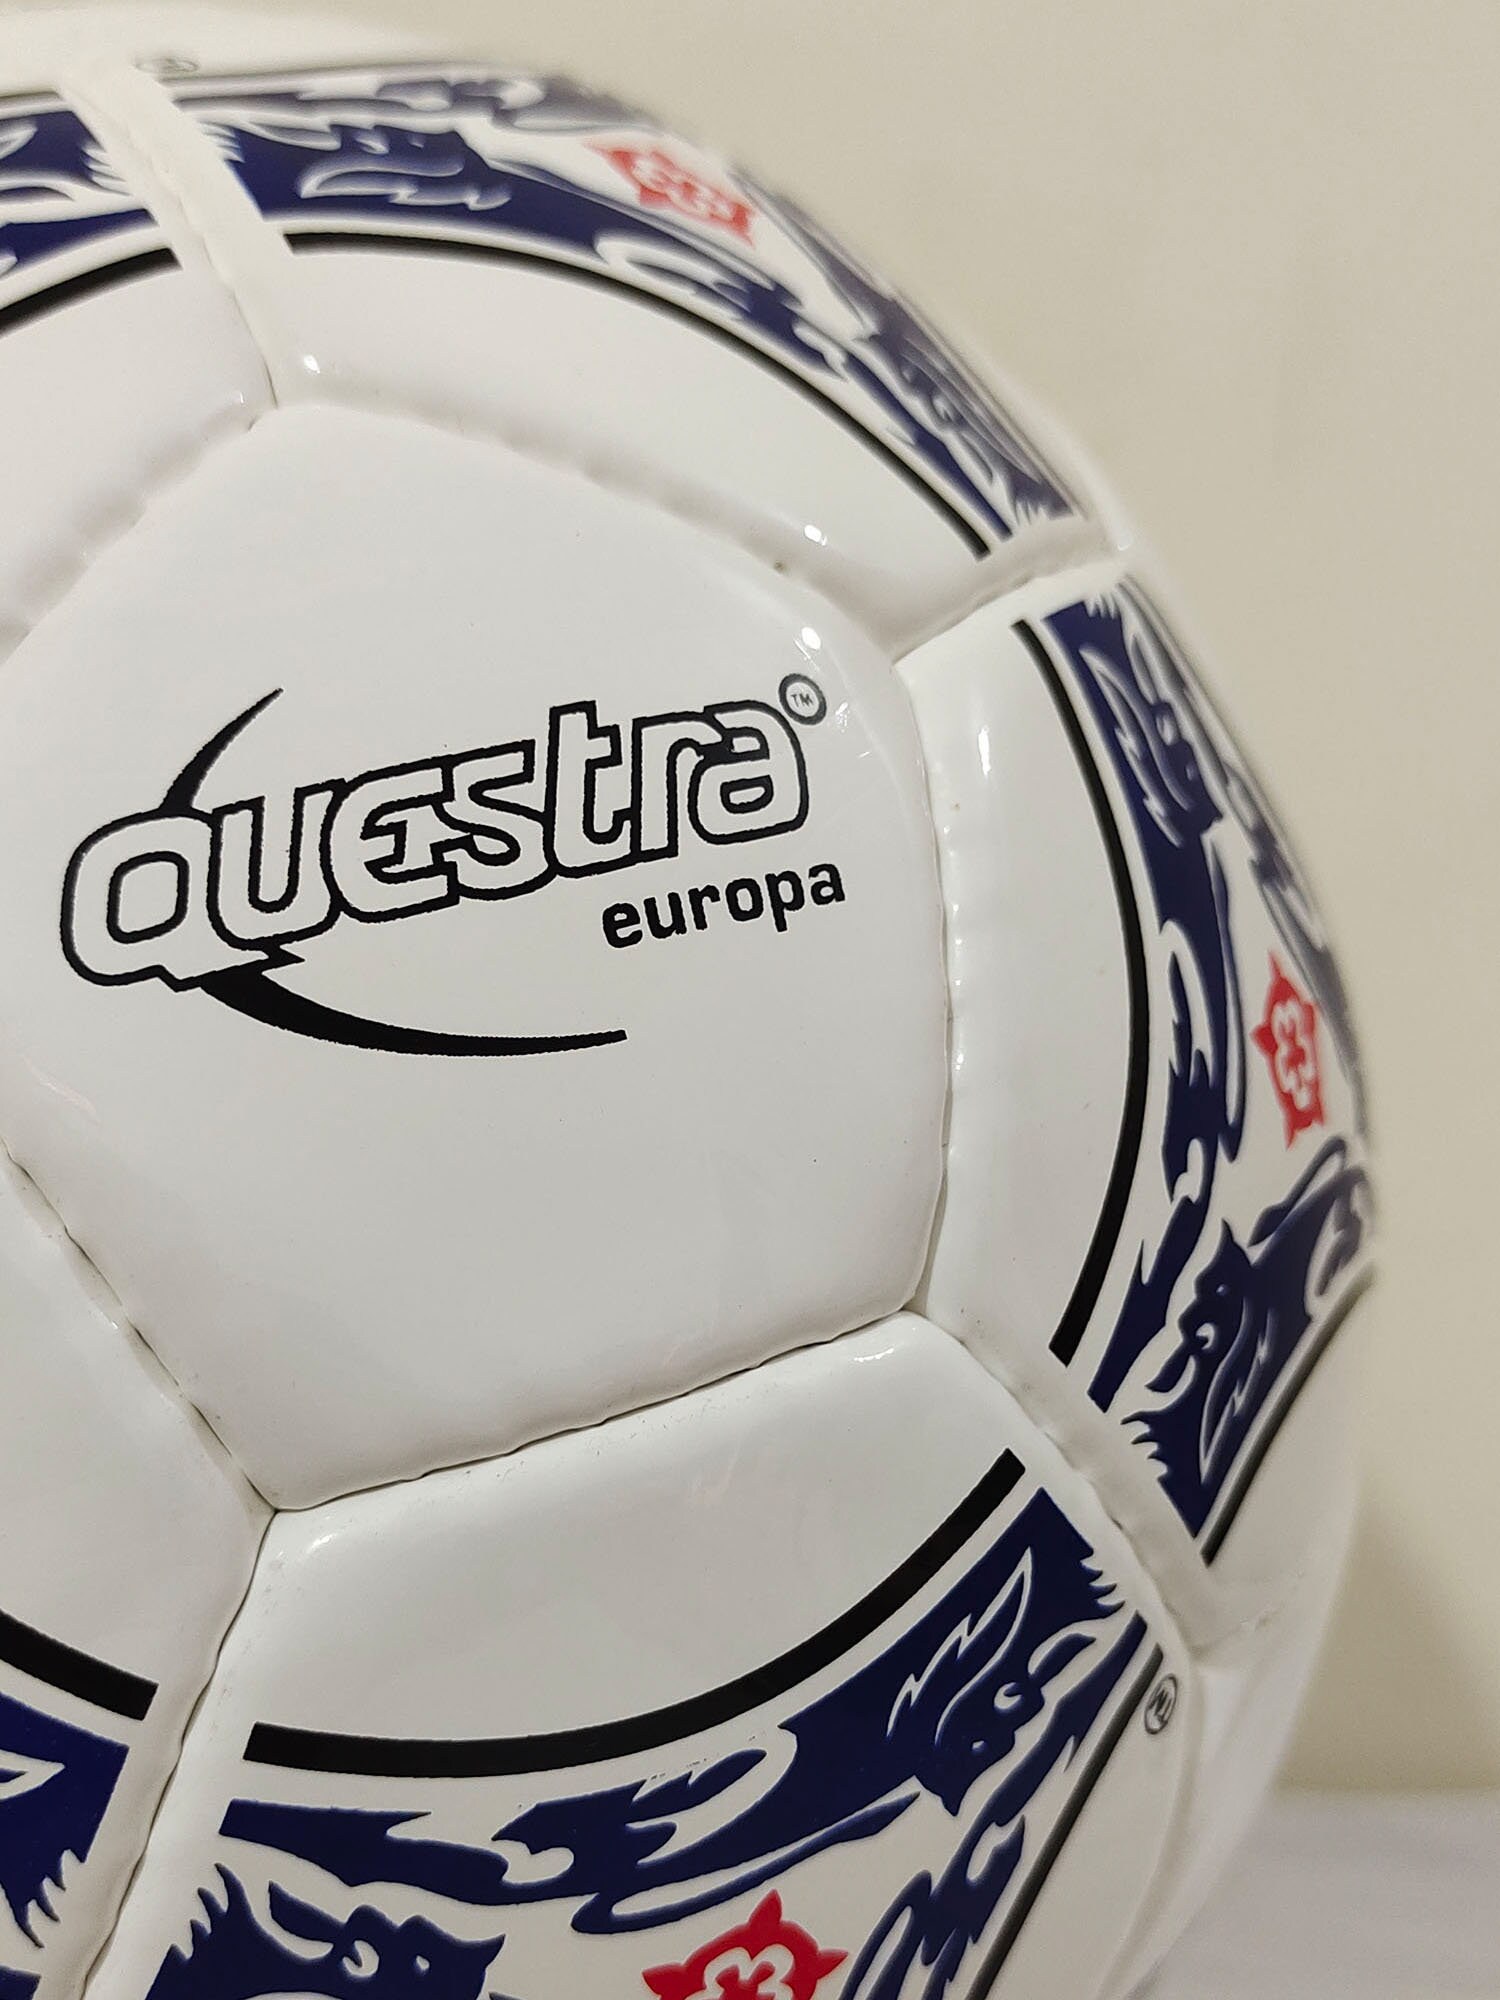 Visualizar Inolvidable Comercial Questra Europa Soccer Ball UEFA 95 Euro Championship Match - Etsy